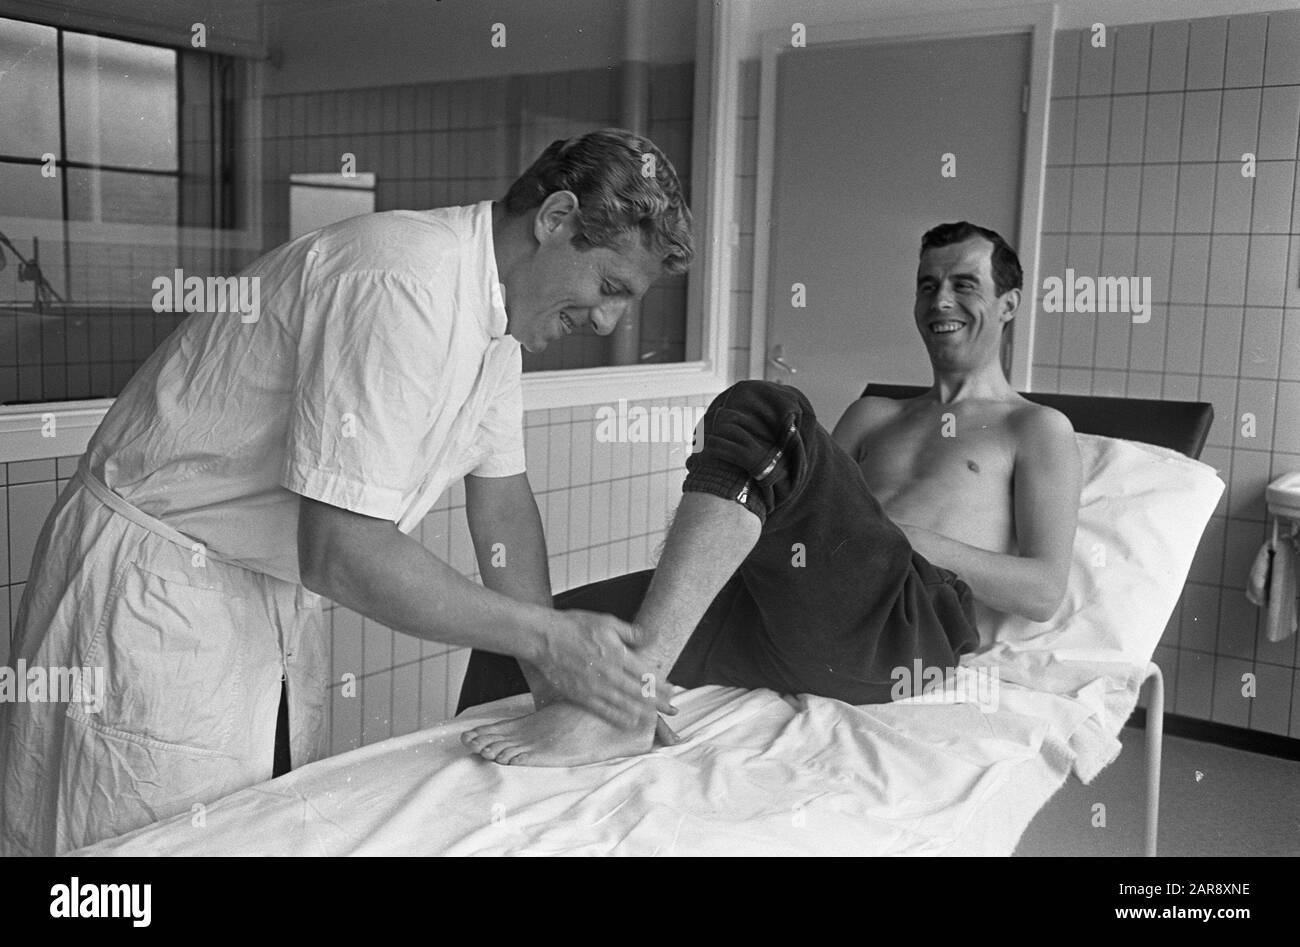 Training Feyenoord, Coen Moulijn massaged by Gerard Meijer Date: August 6, 1965 Keywords: massages, sports, football, footballers Personal name: Meijer Gerard, Moulijn, Coen Institution Name : Feyenoord Stock Photo